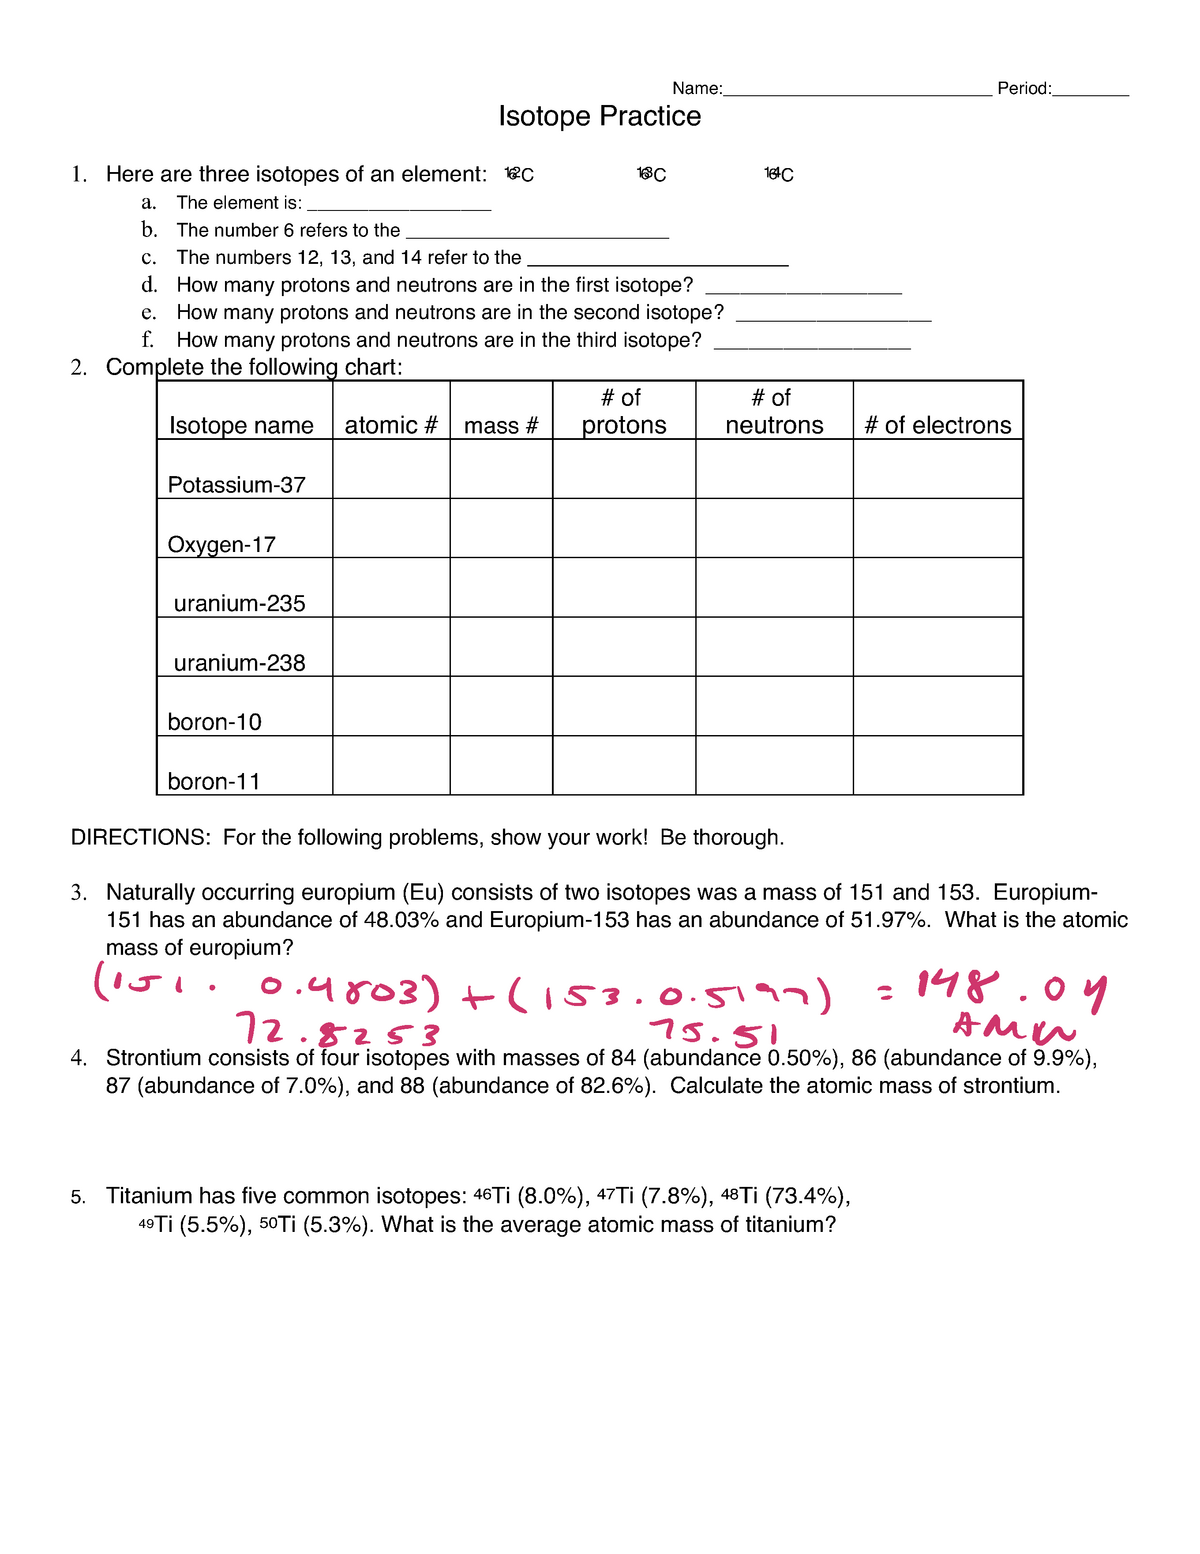 Isotope practice - eskandari summer - Name: Period:______ Isotope With Isotope Practice Worksheet Answers